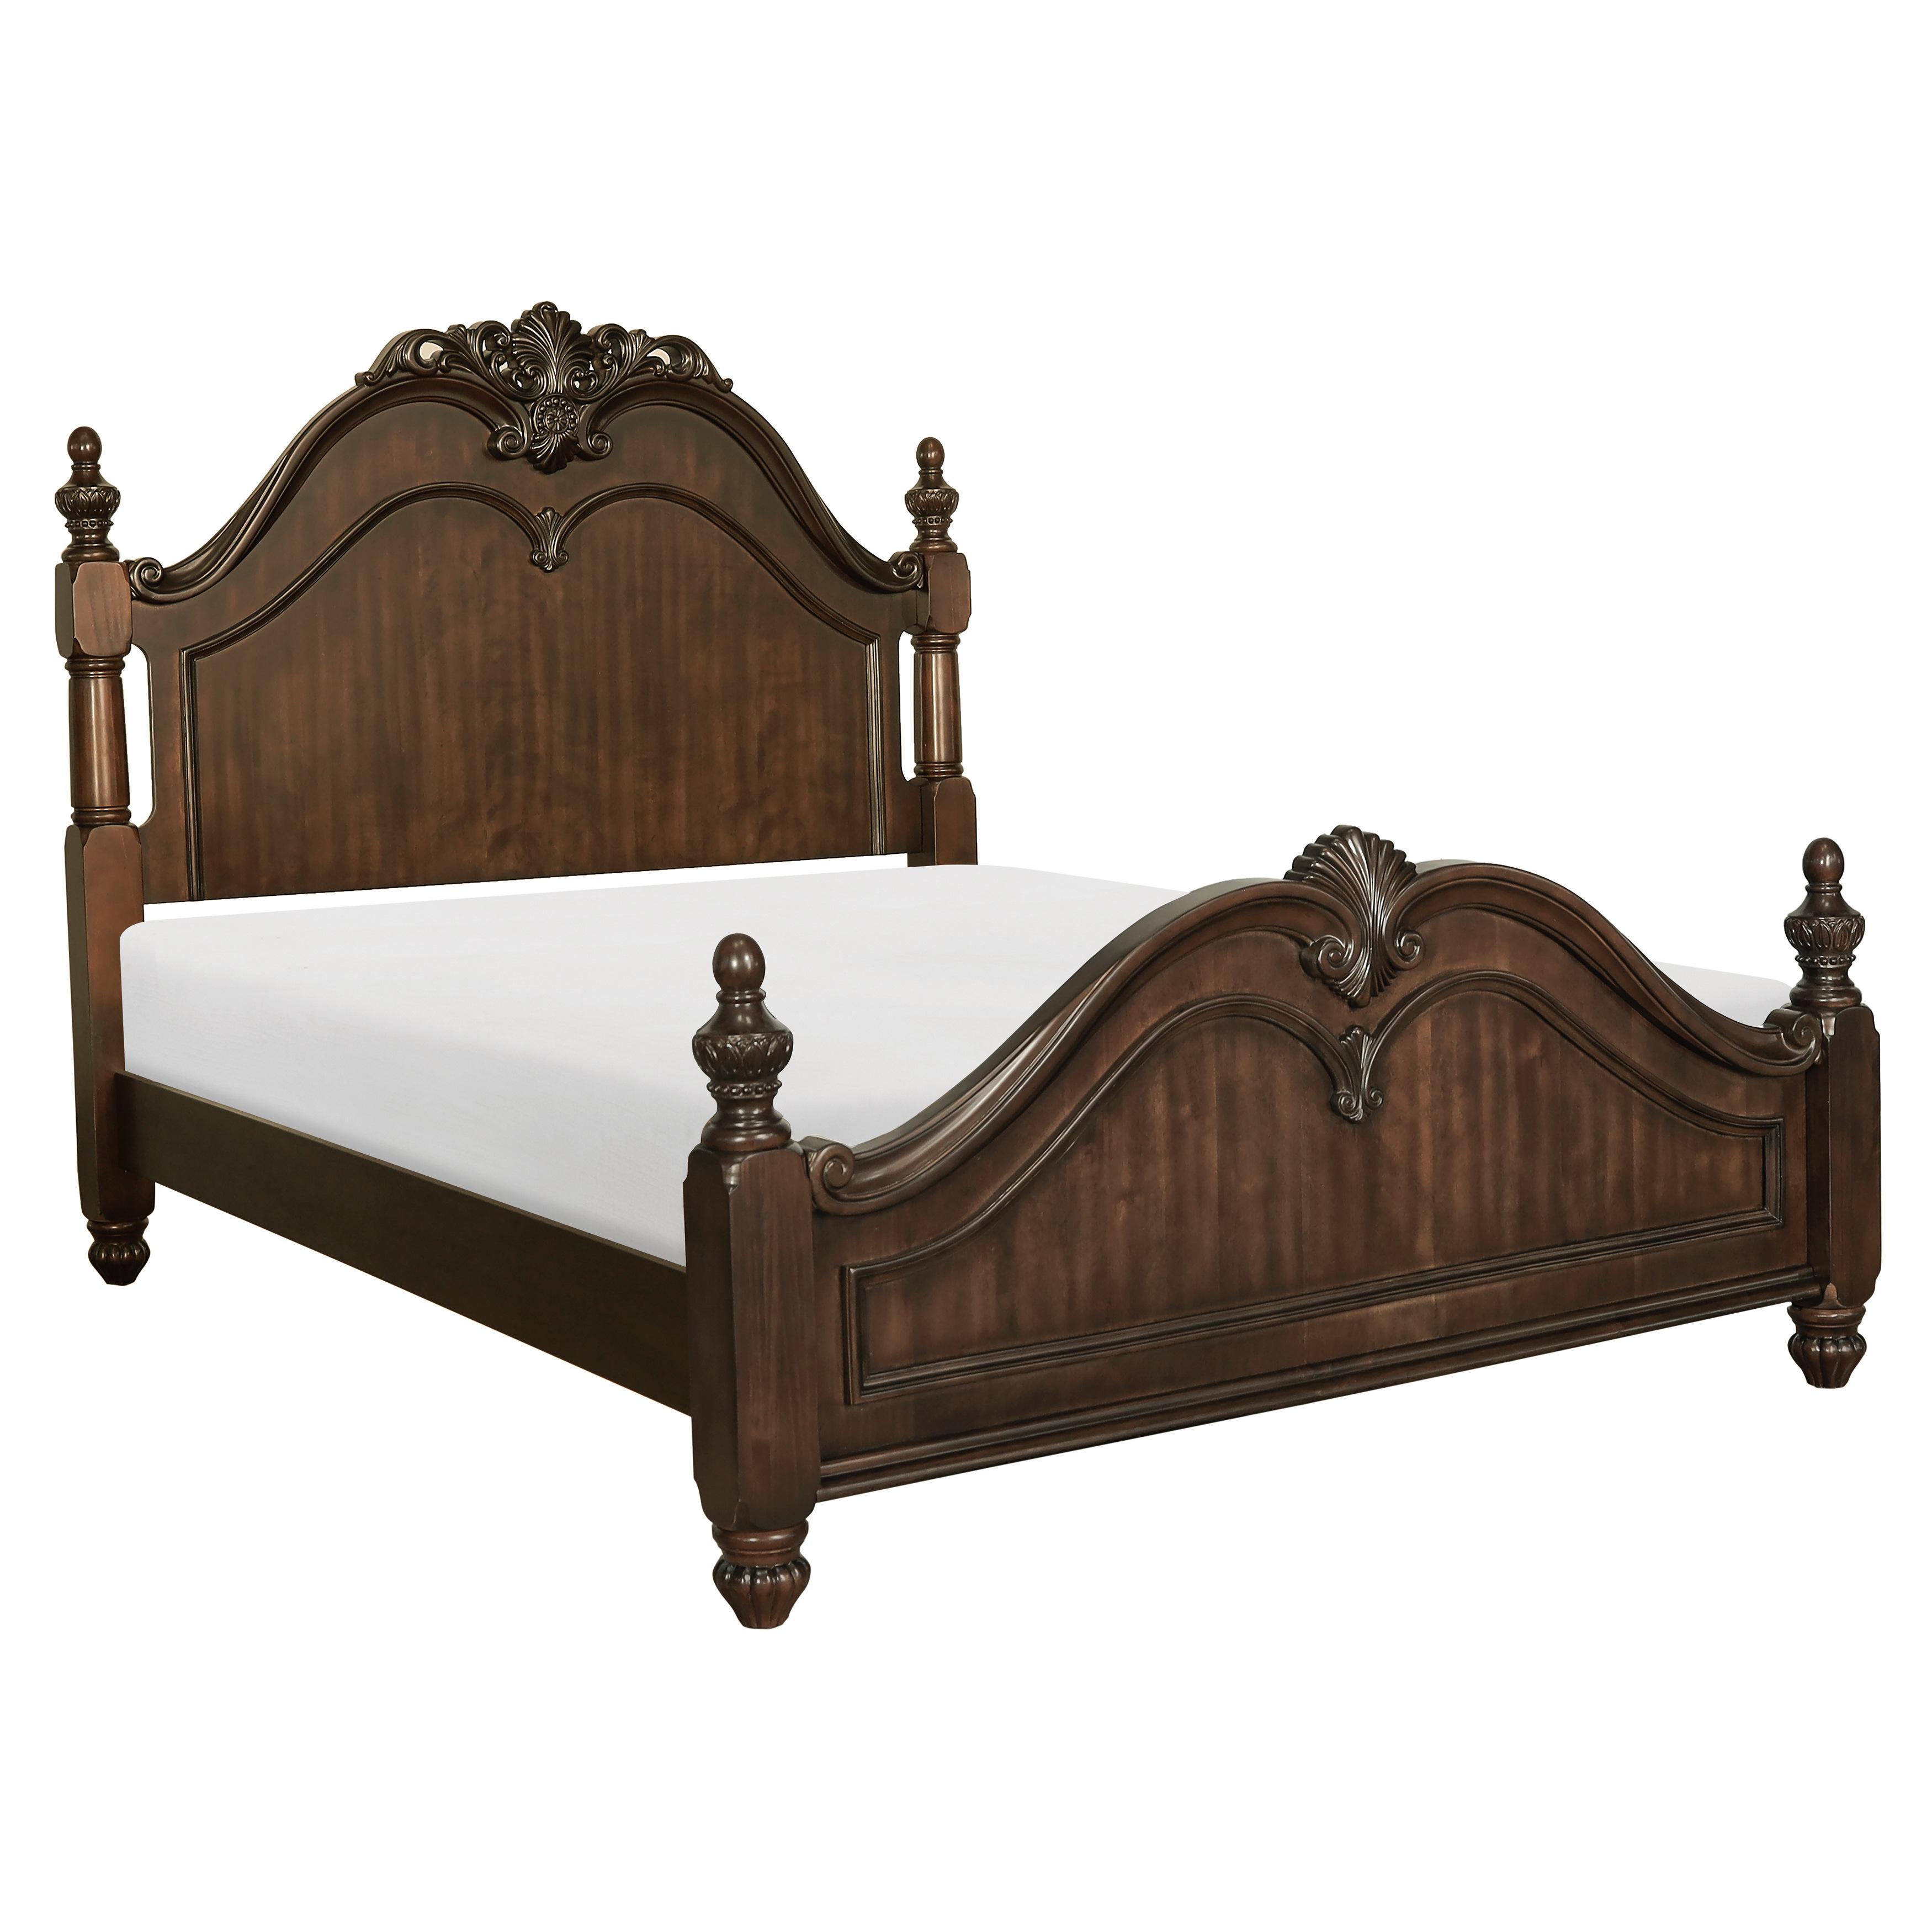 

    
Traditional Dark Cherry Wood CAL Bedroom Set 6pcs Homelegance 1869K-1CK* Mont Belvieu
